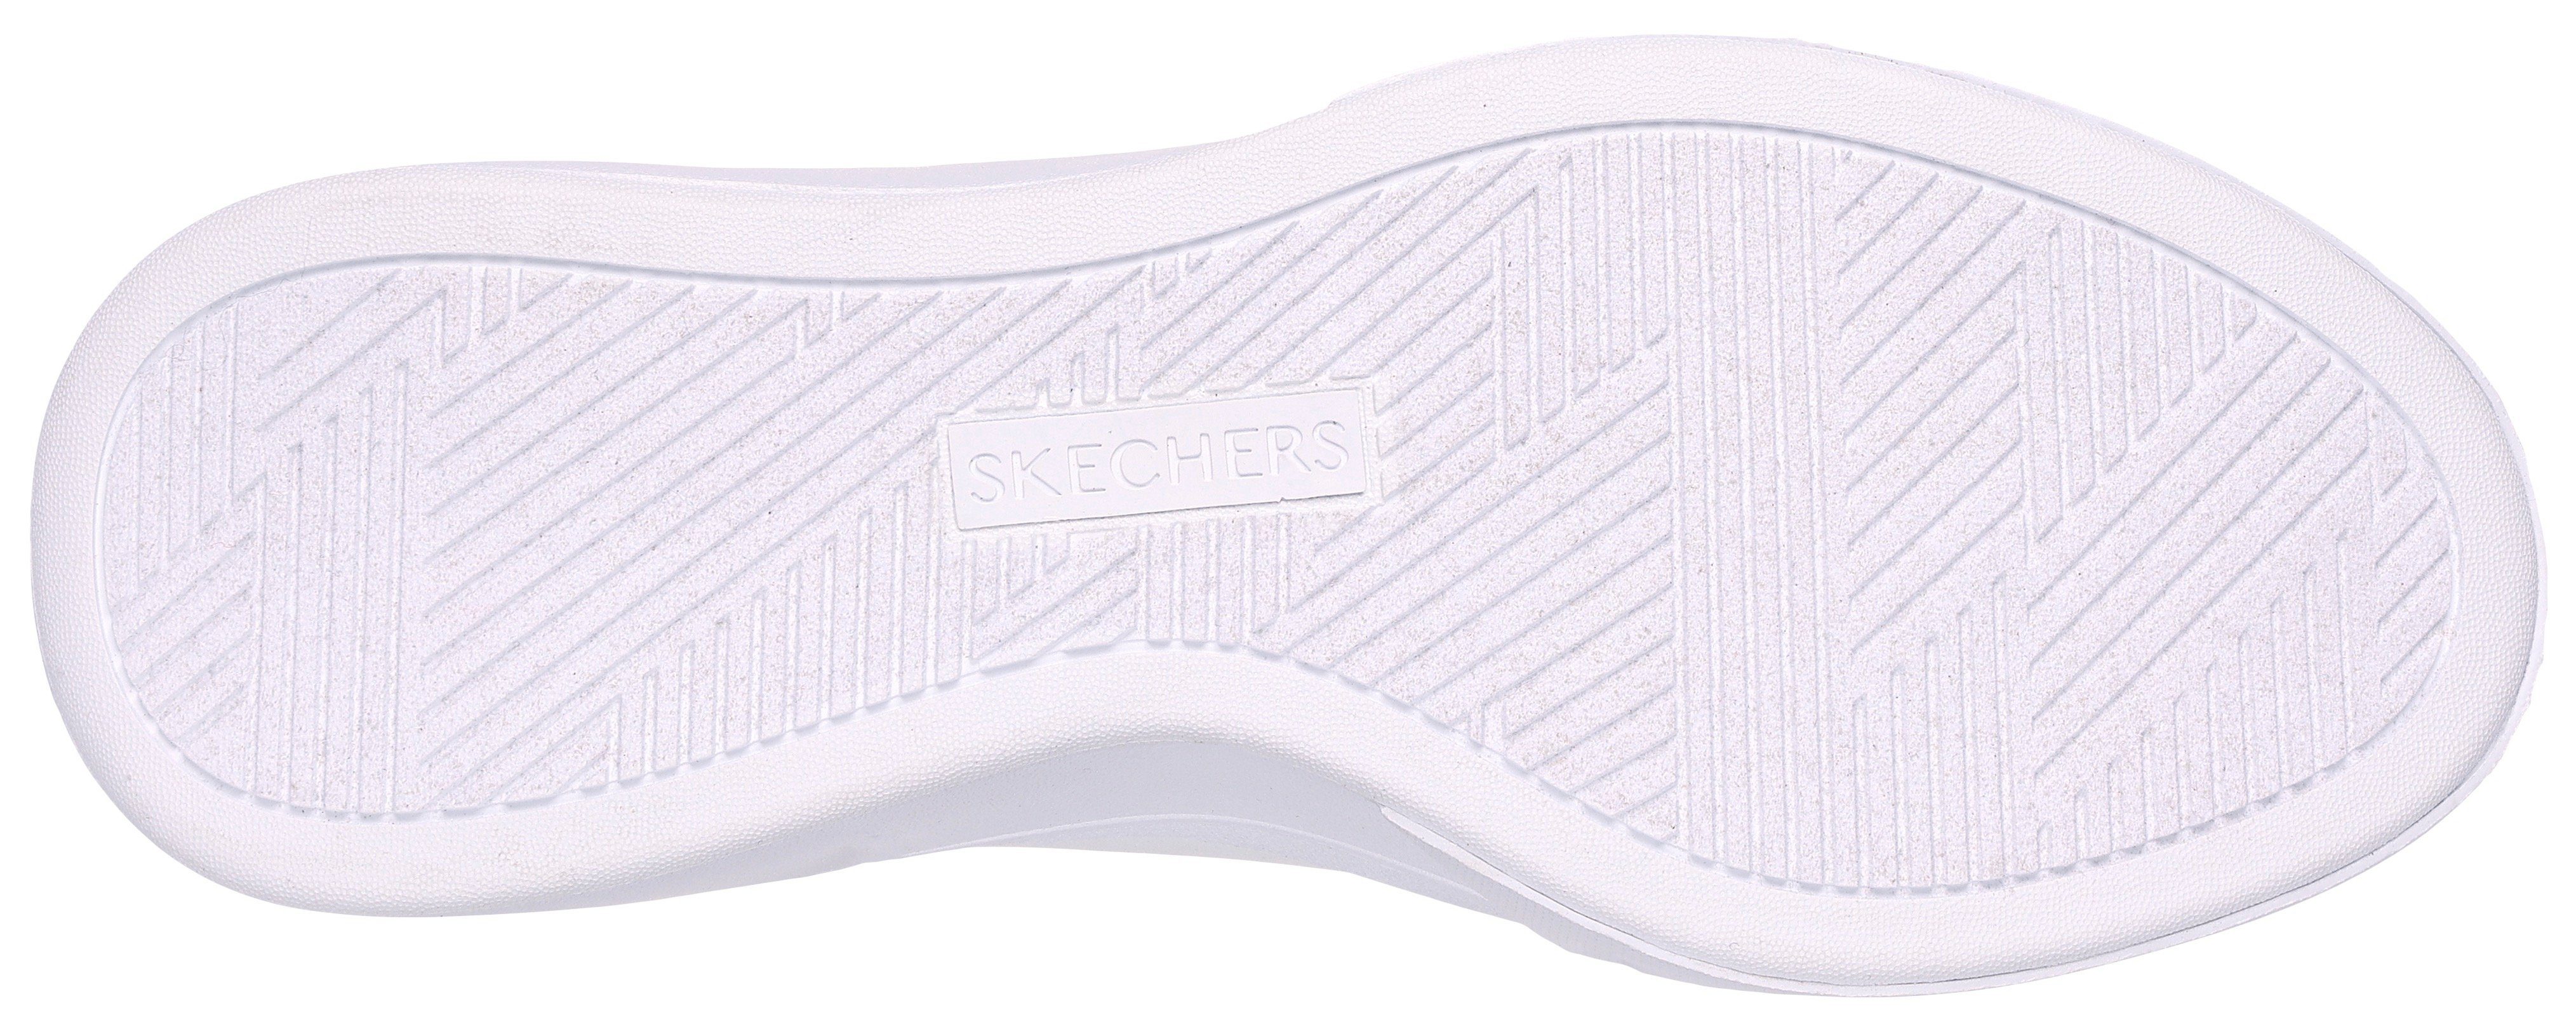 Kontrastbesatz Sneaker CORDOVA mit CLASSIC- (20203204) white/black Skechers